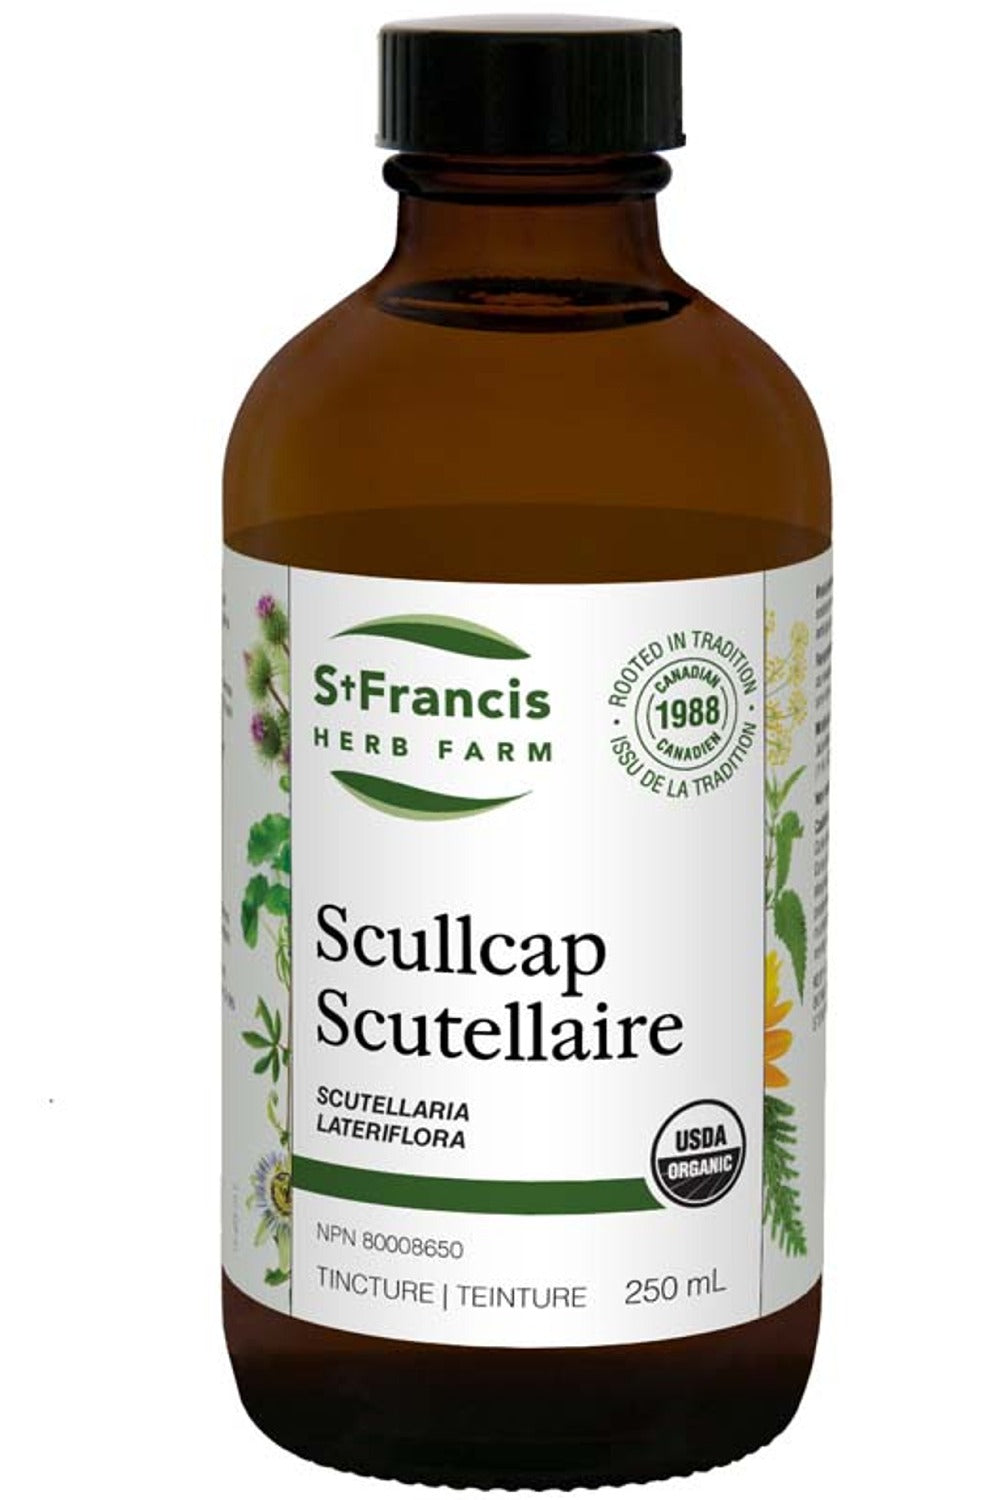 ST FRANCIS HERB FARM Scullcap (250 ml)